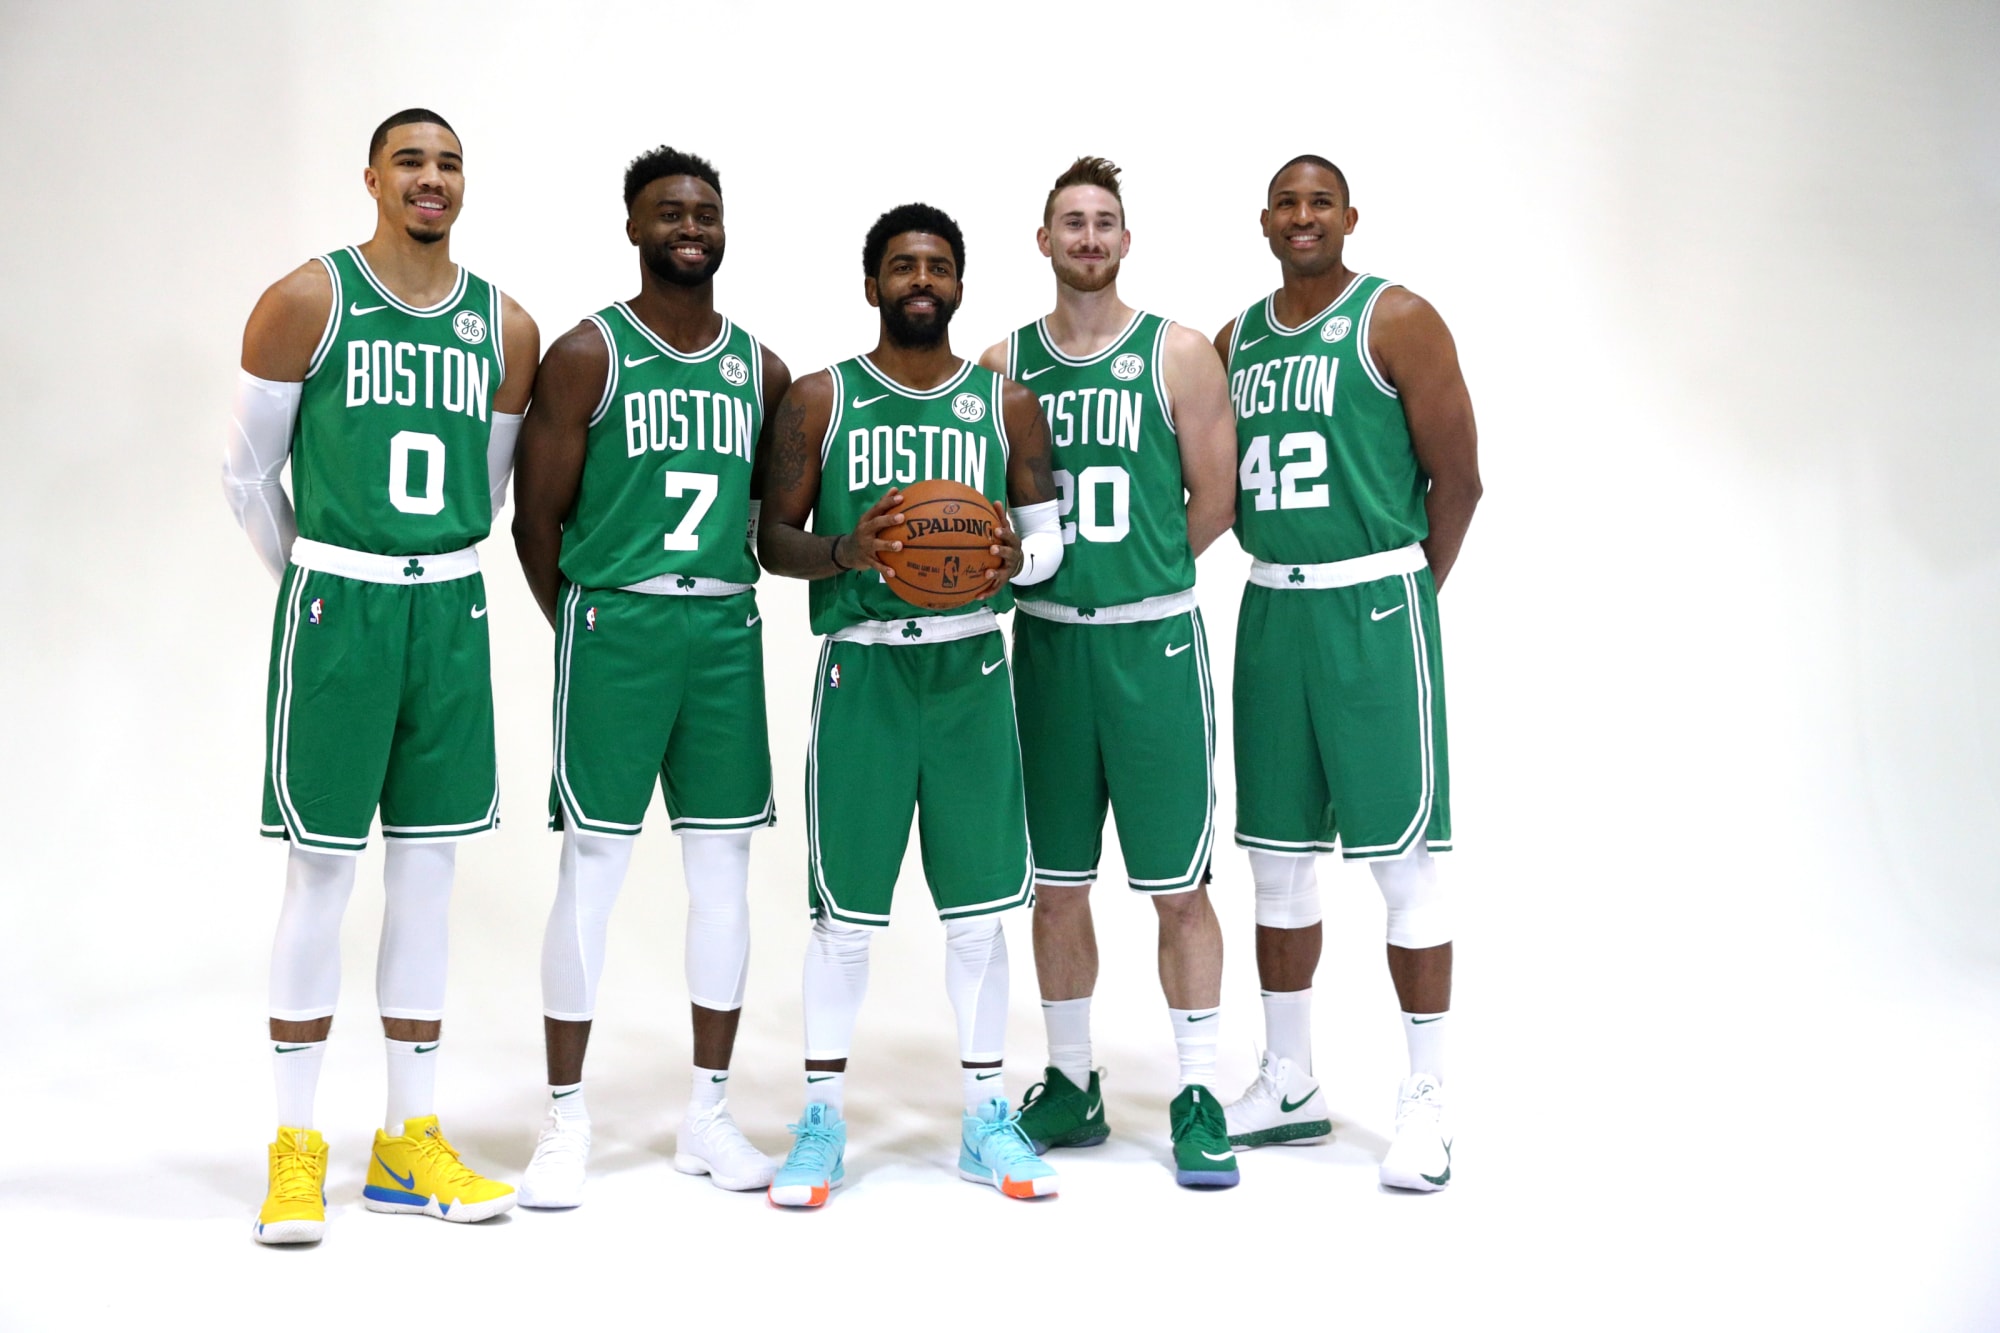 Boston Celtics 3 takeaways from team's media day